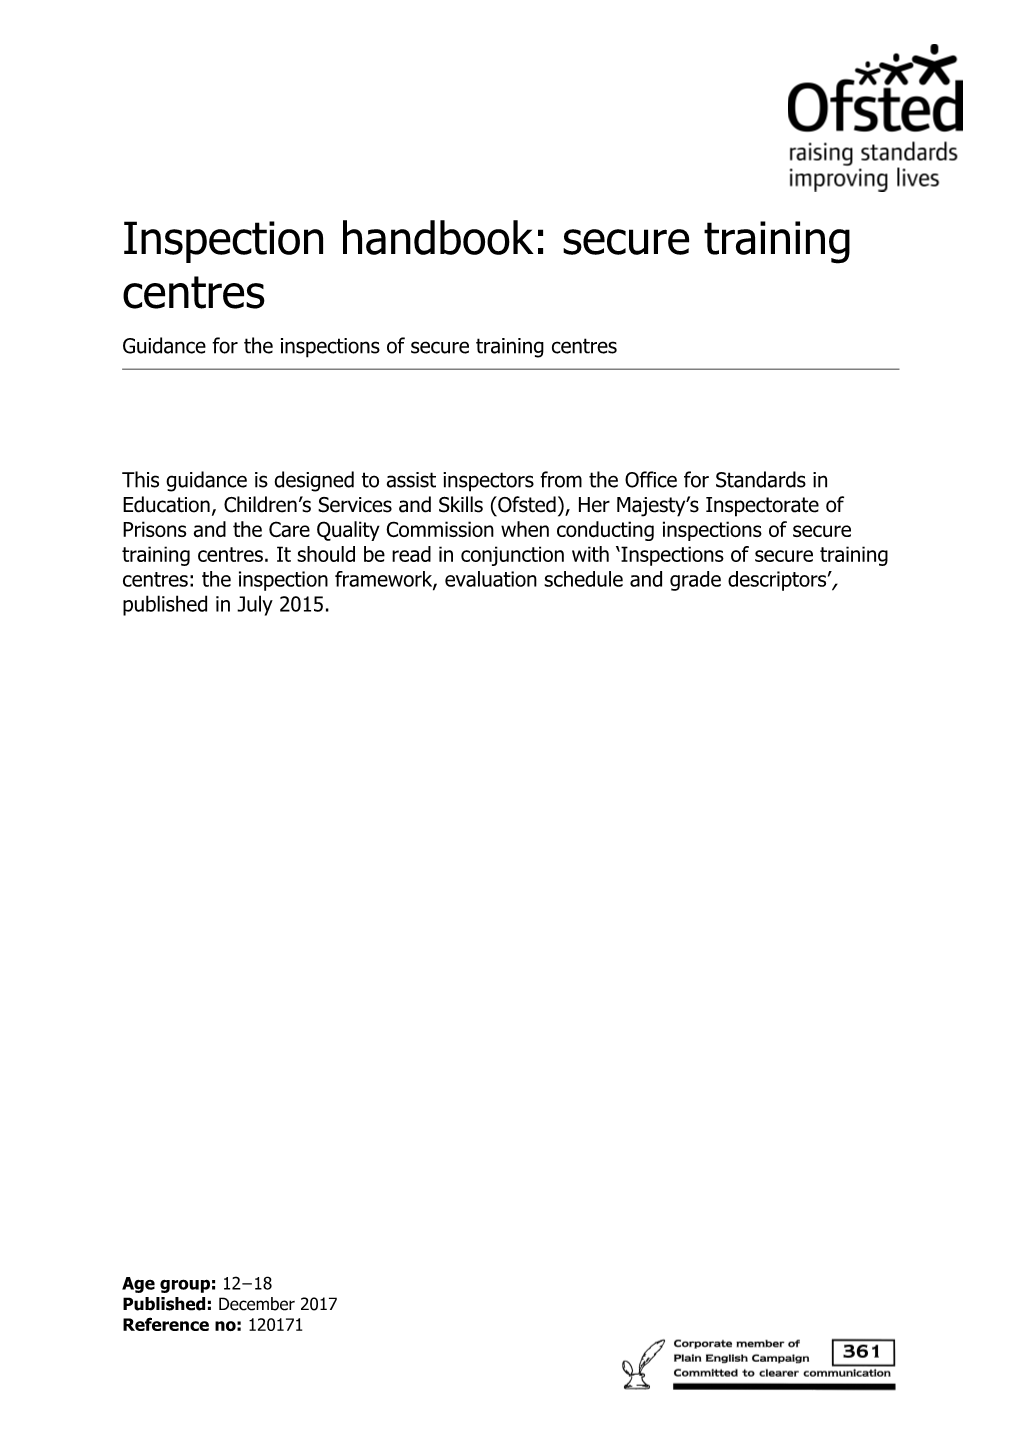 Inspection Handbook: Secure Training Centres